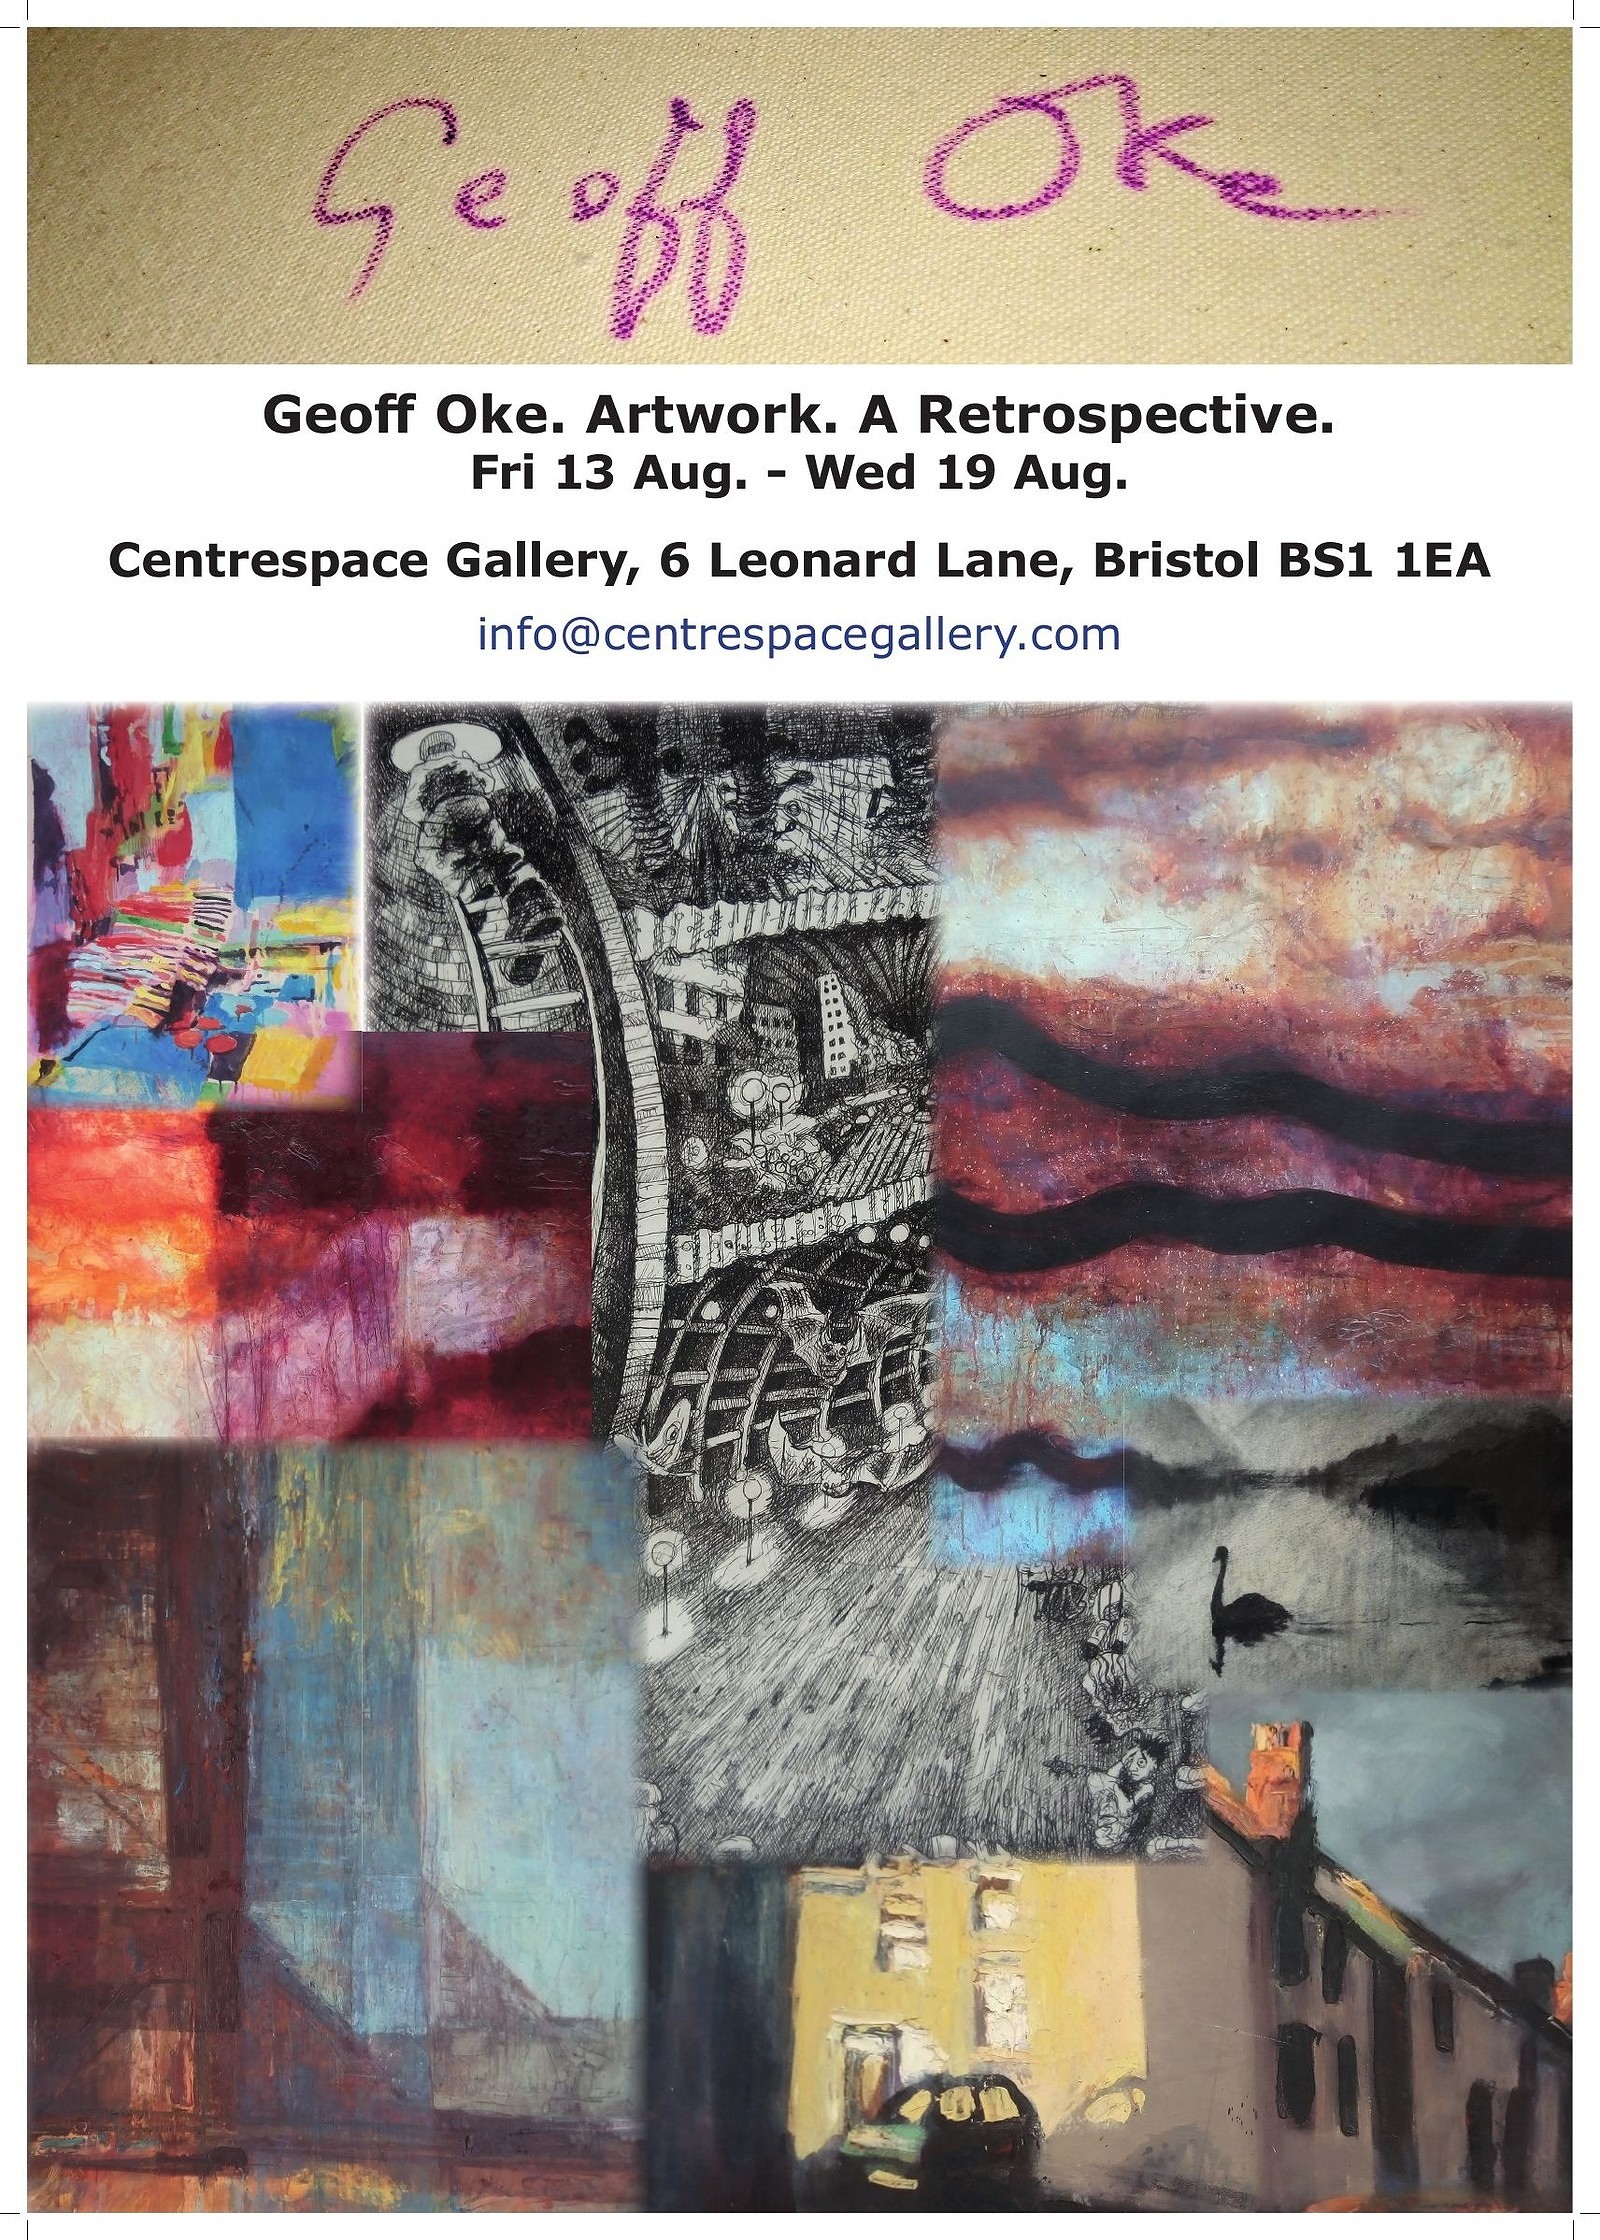 Geoff Oke - Artwork Retrospective at Centrespace